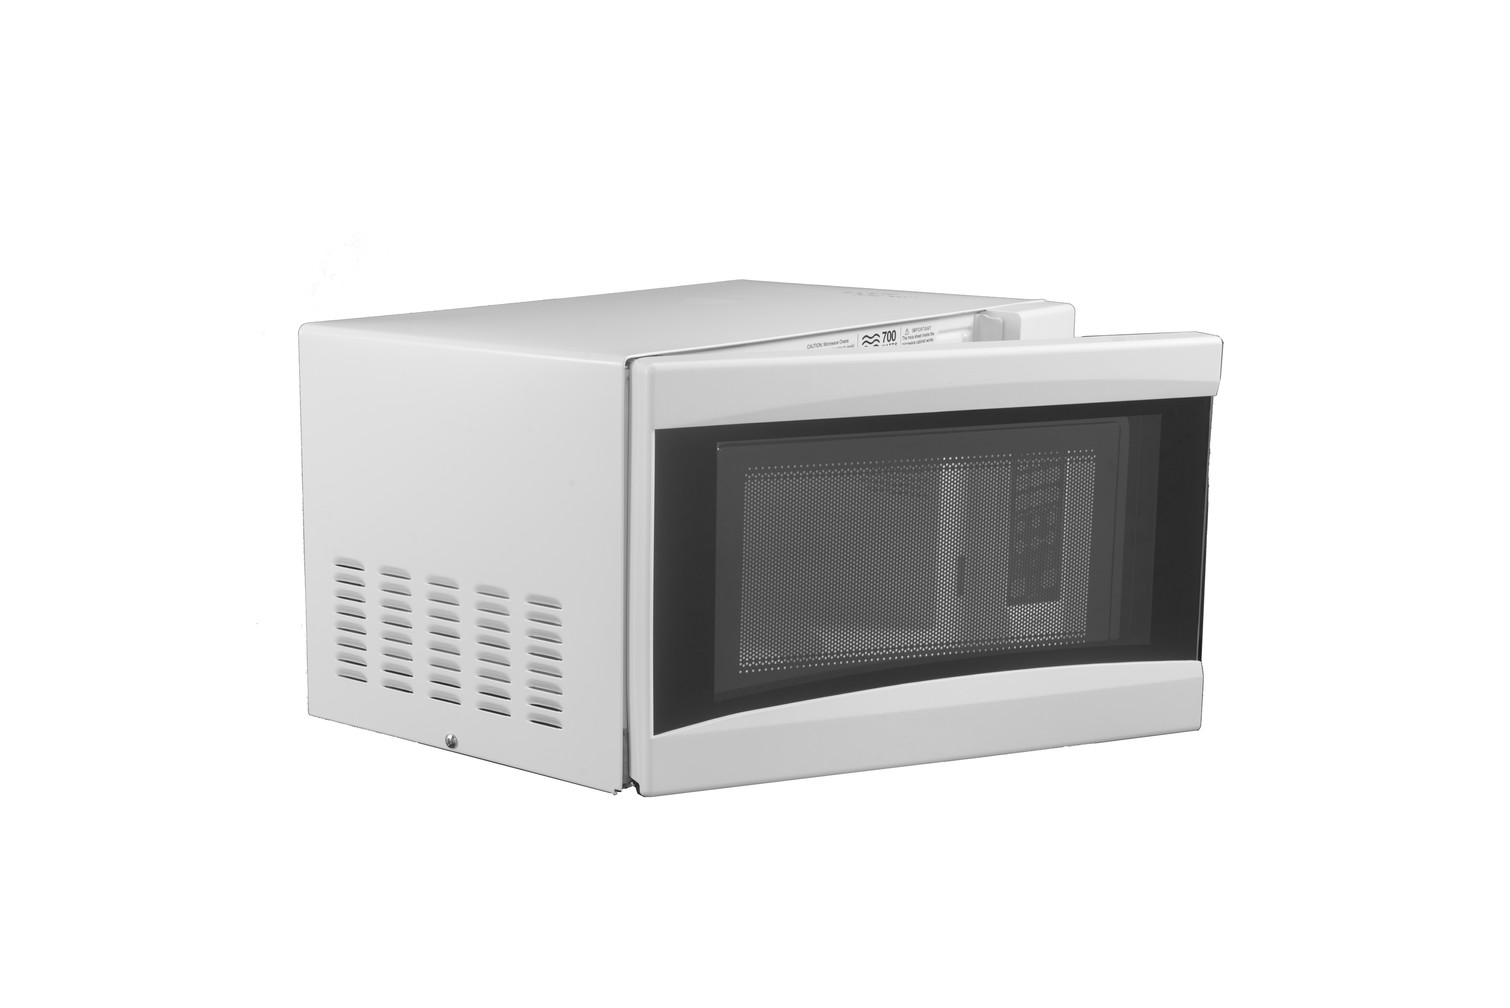 Walmart EM720CGA-B 700W Countertop Microwave Oven - Black, WORKS GREAT  839724013269